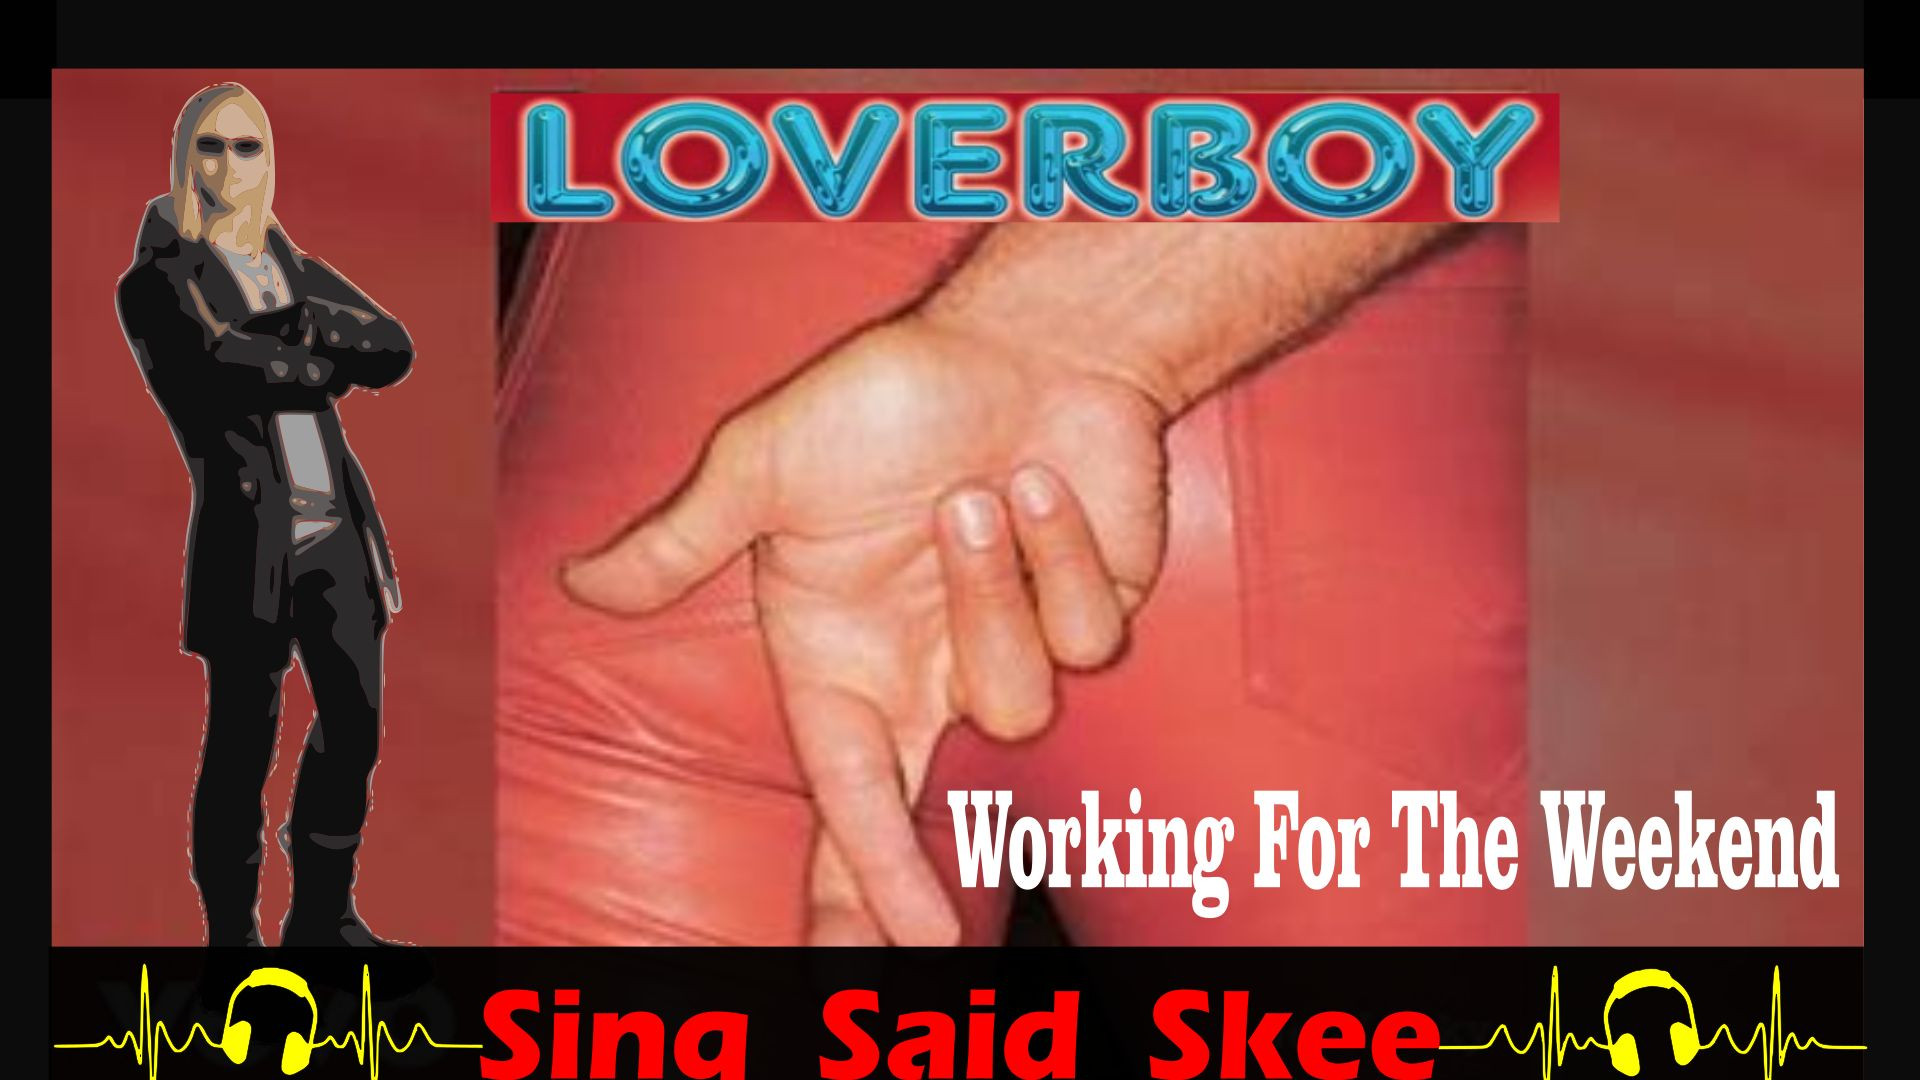 Working For The Weekend - Loverboy - Sing_Said_Skee